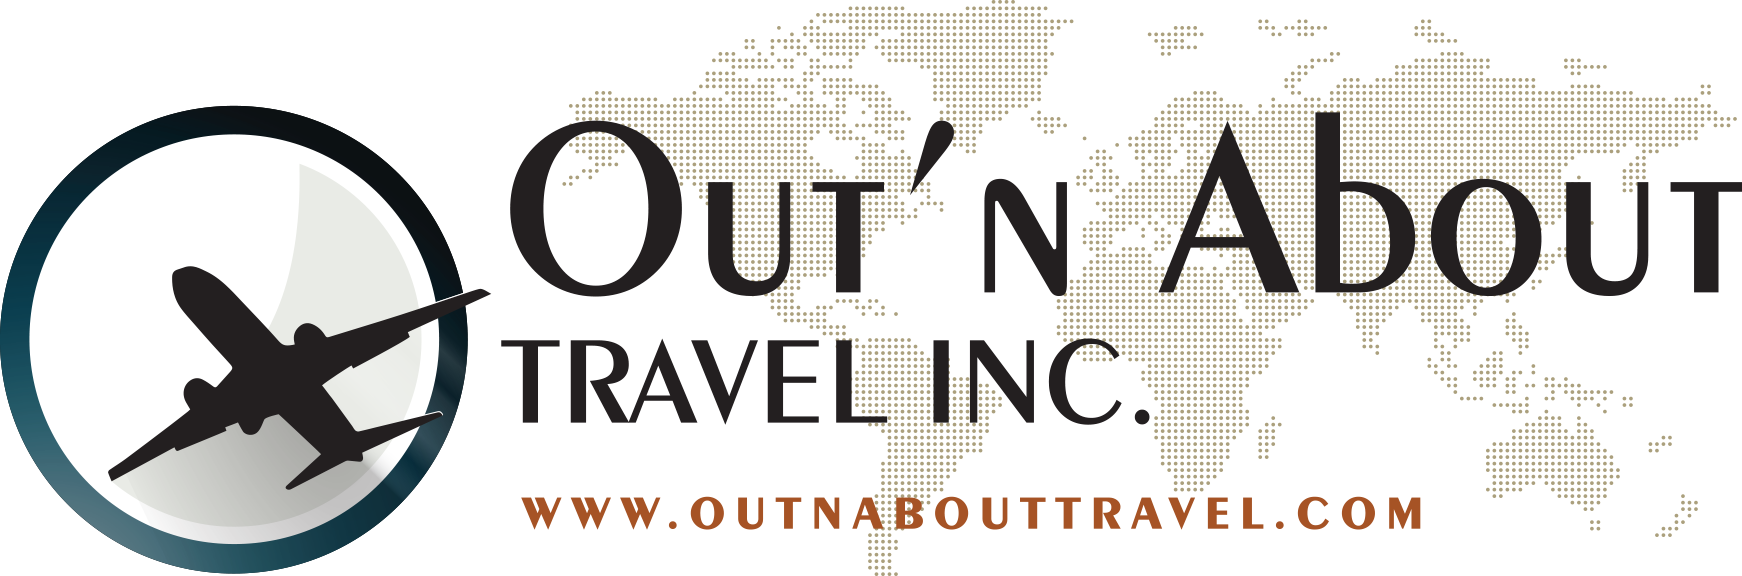 OutNAboutTravel_Logo_colour_lightbg.png